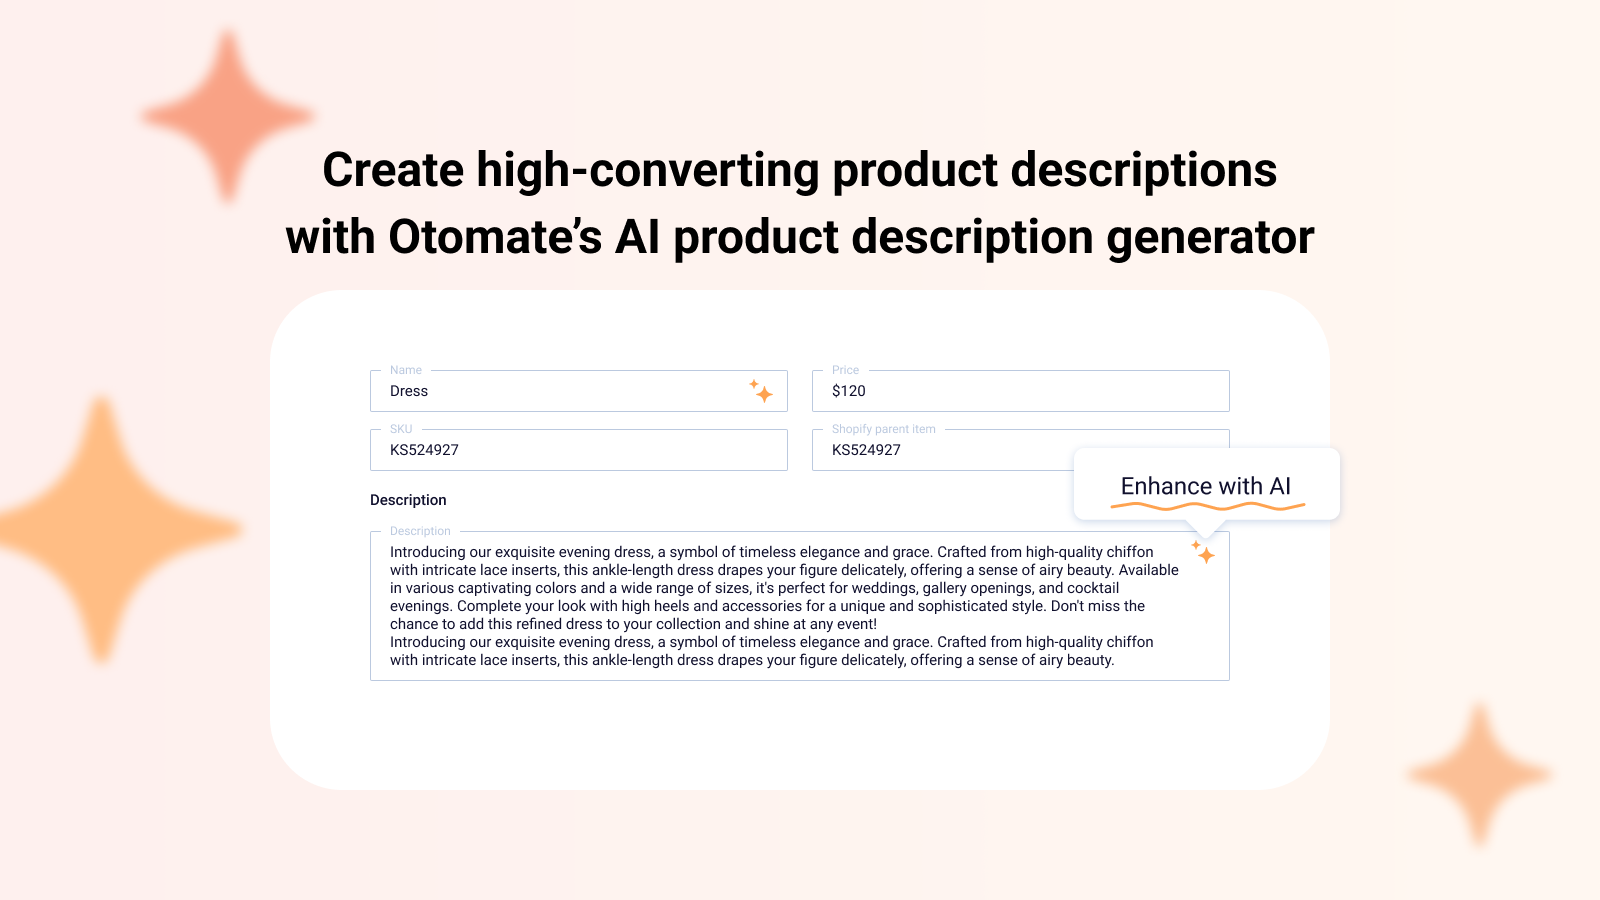 Create descriptions with AI product description generator